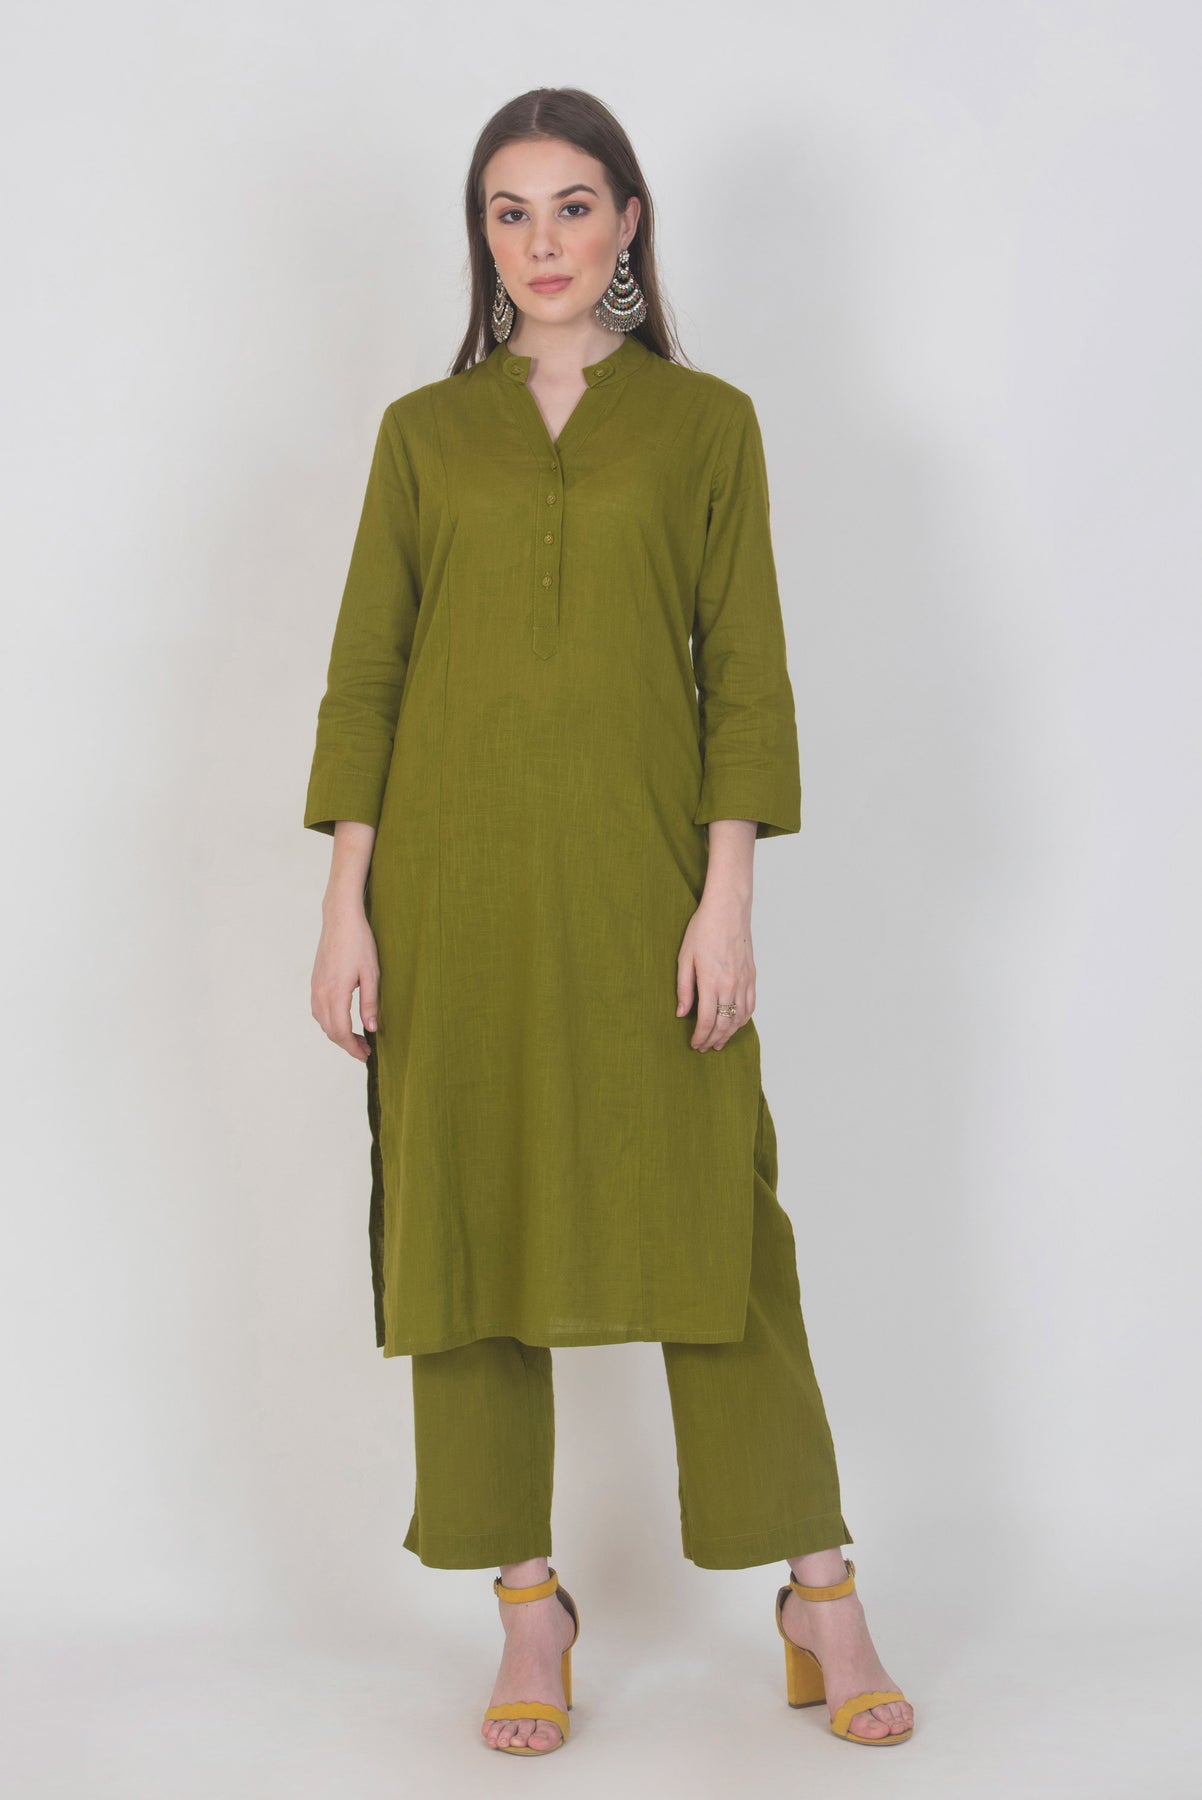 Buy Olive Green Silk Cotton Designer Readymade Kurti | Party Wear Kurtis